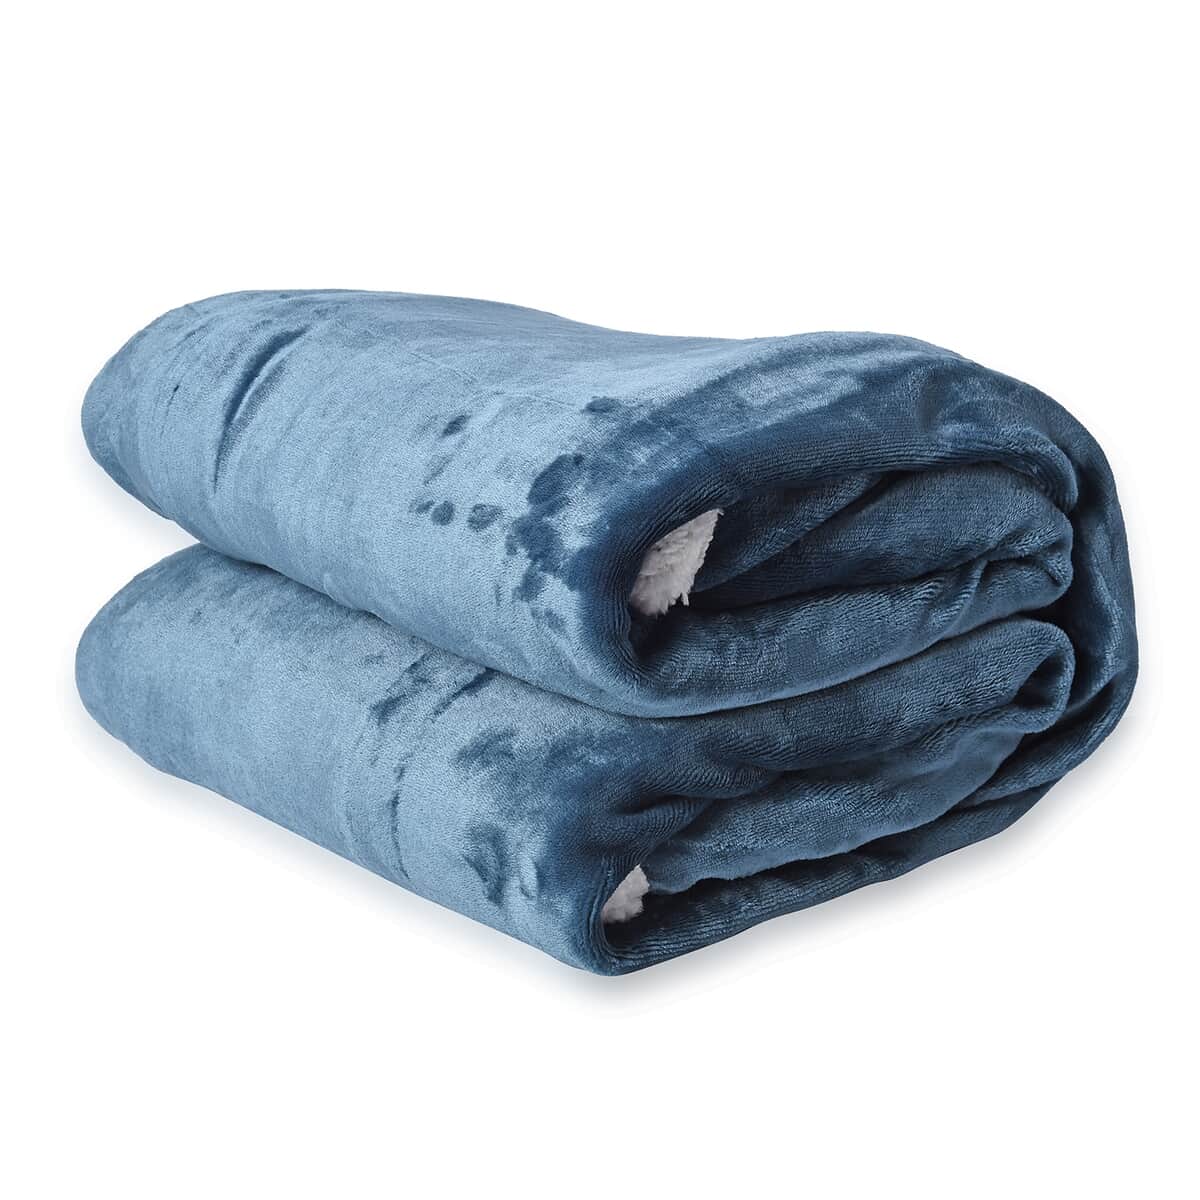 HOMESMART Teal Plush Flannel & Sherpa Reversible Blanket image number 2